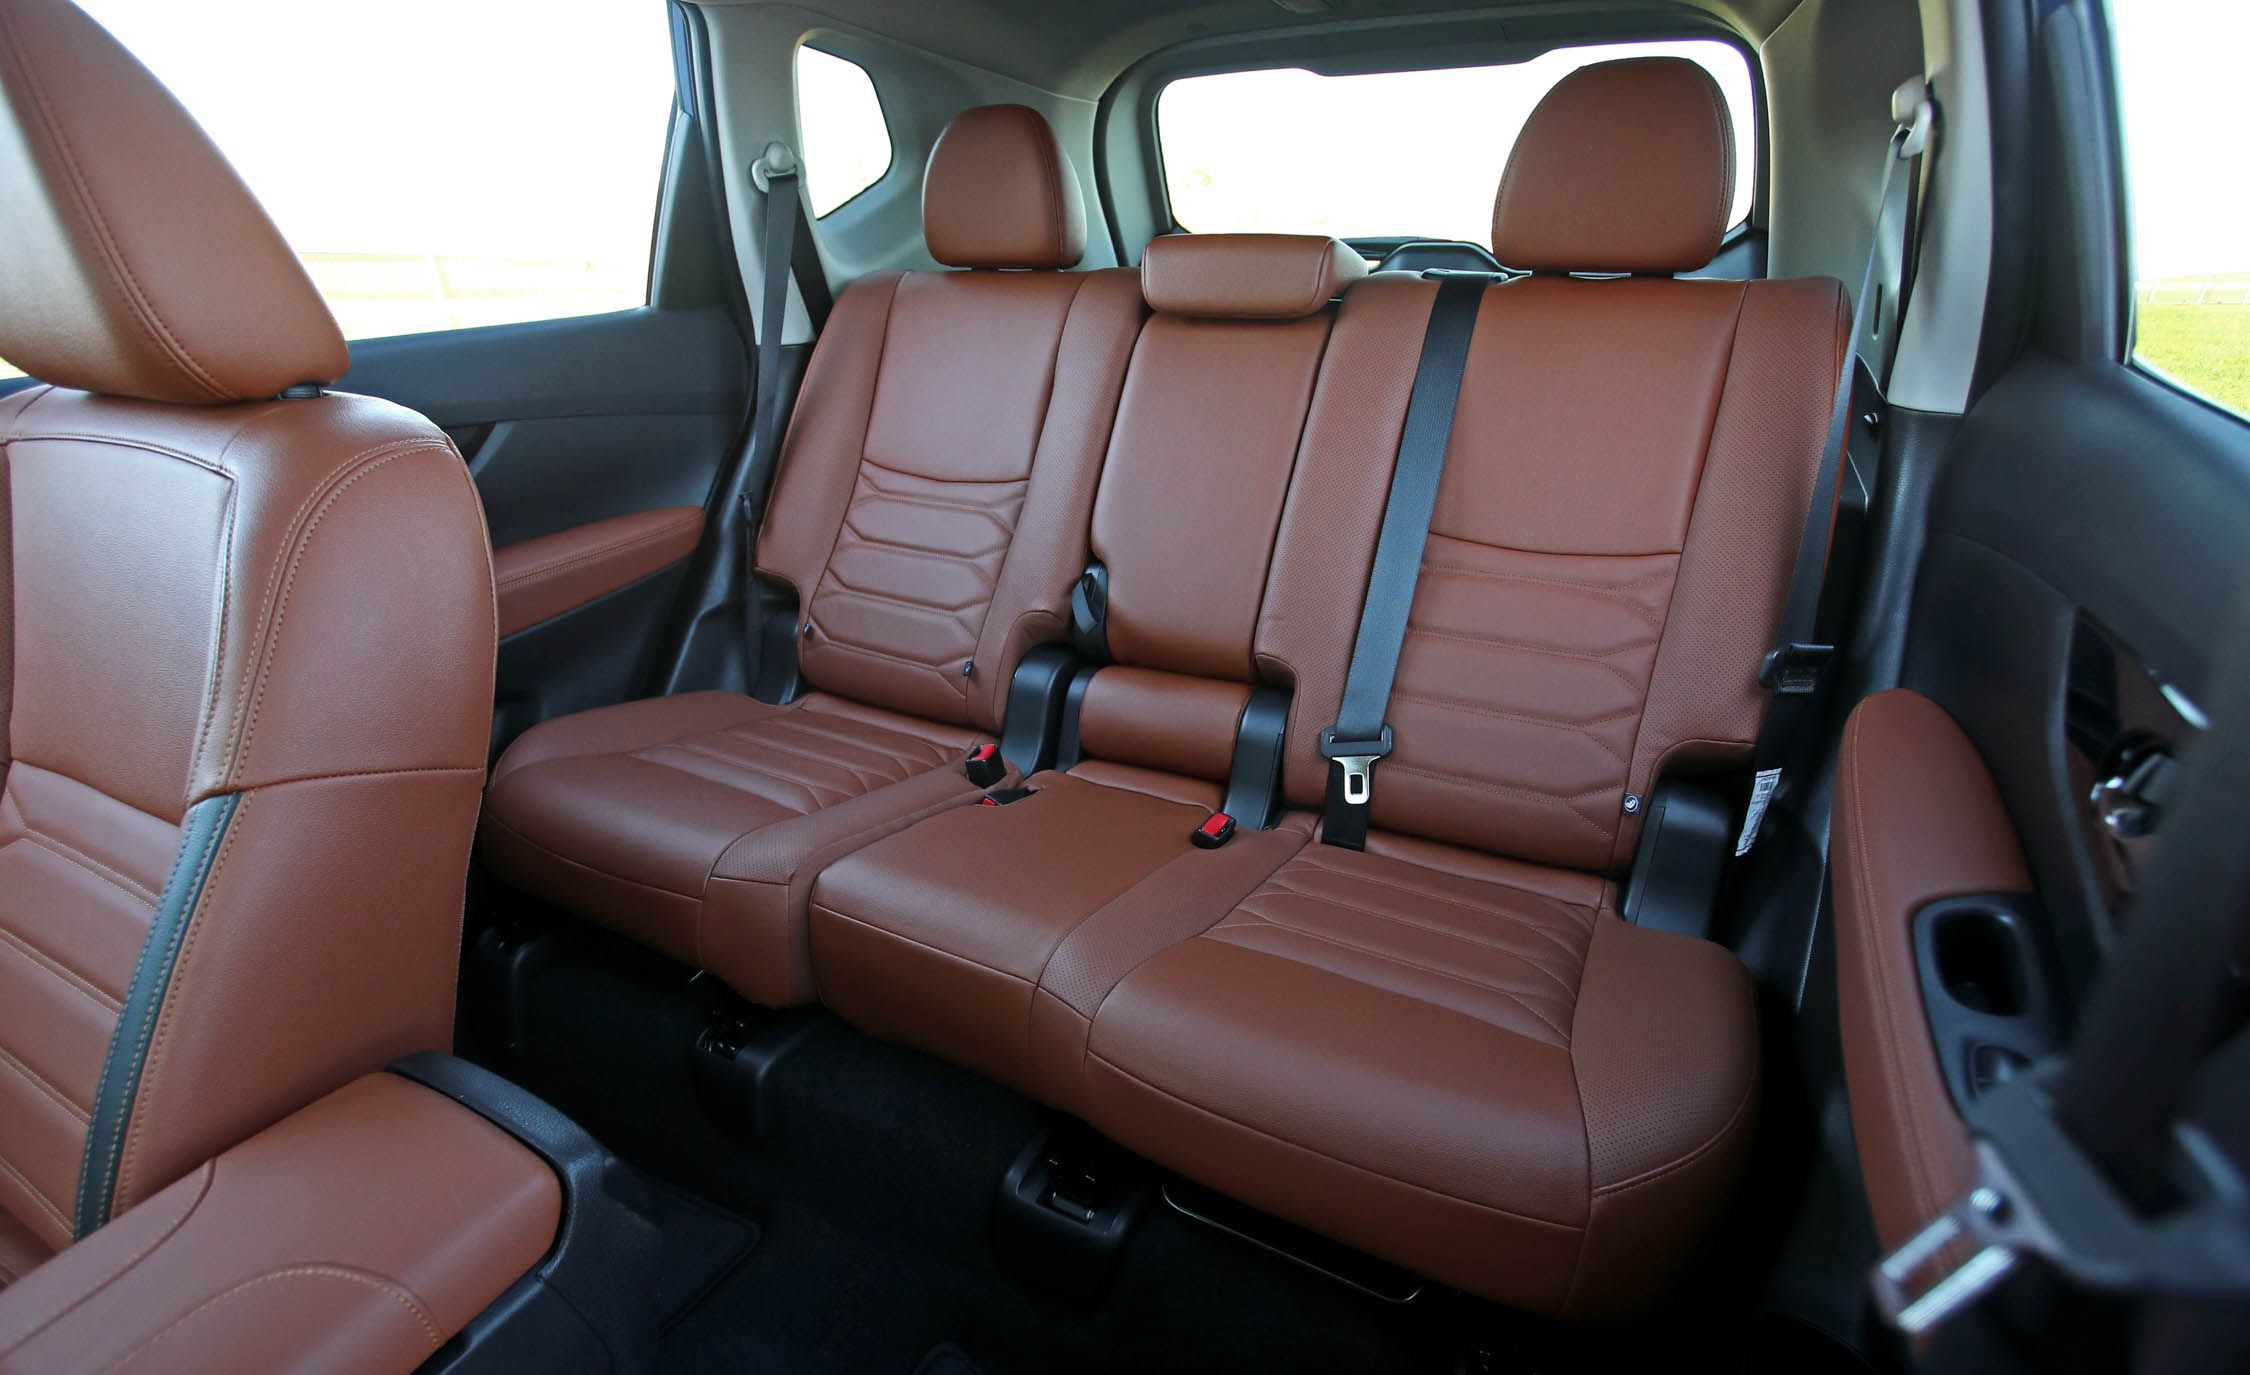 2017 Nissan Rogue Interior Seats Rear (View 28 of 37)